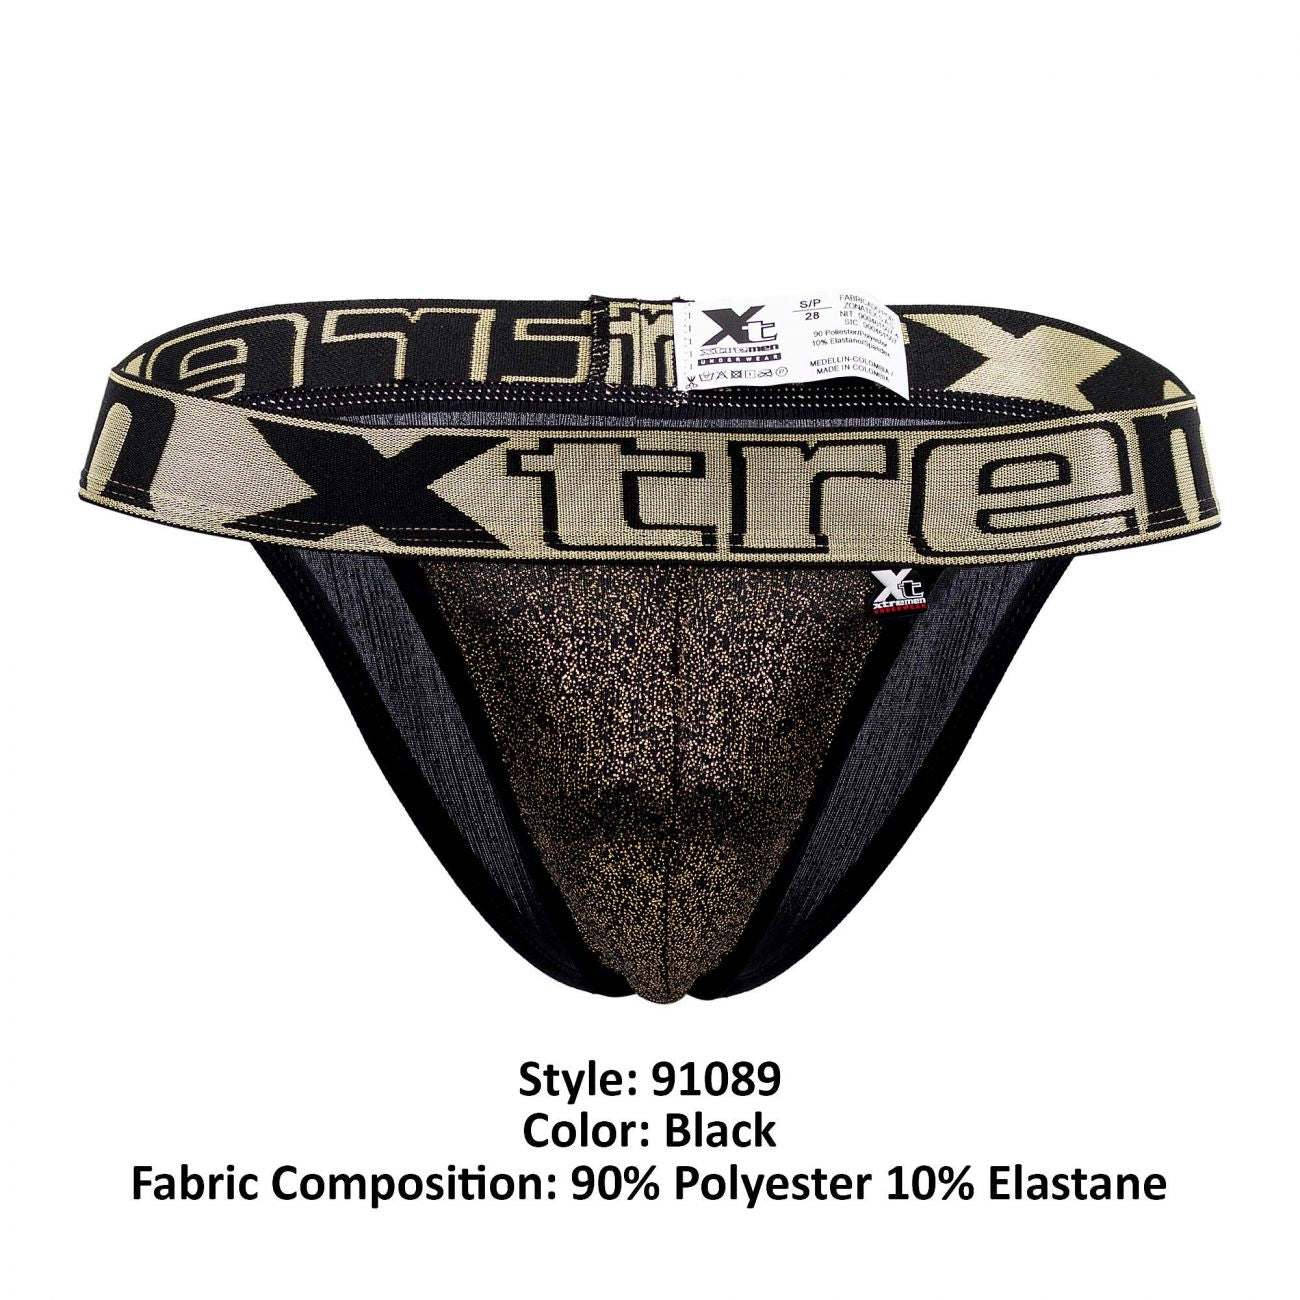 Xtremen 91089 Frice Microfiber Bikini Black